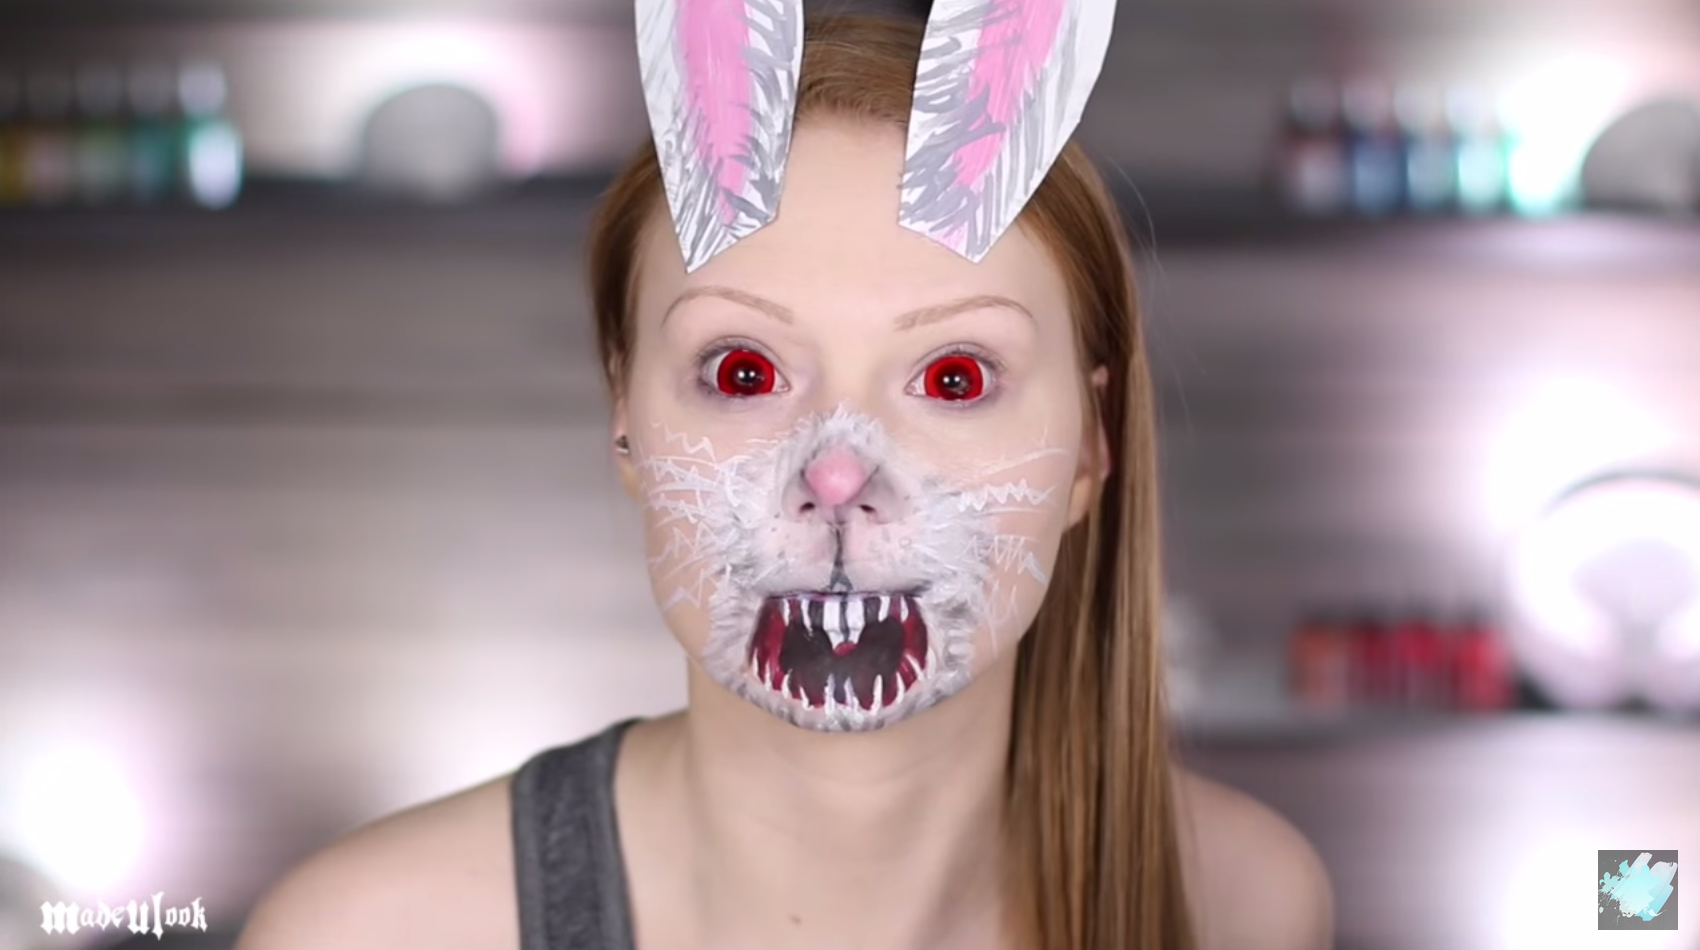 This Killer Bunny Makeup Tutorial Is Terrifying